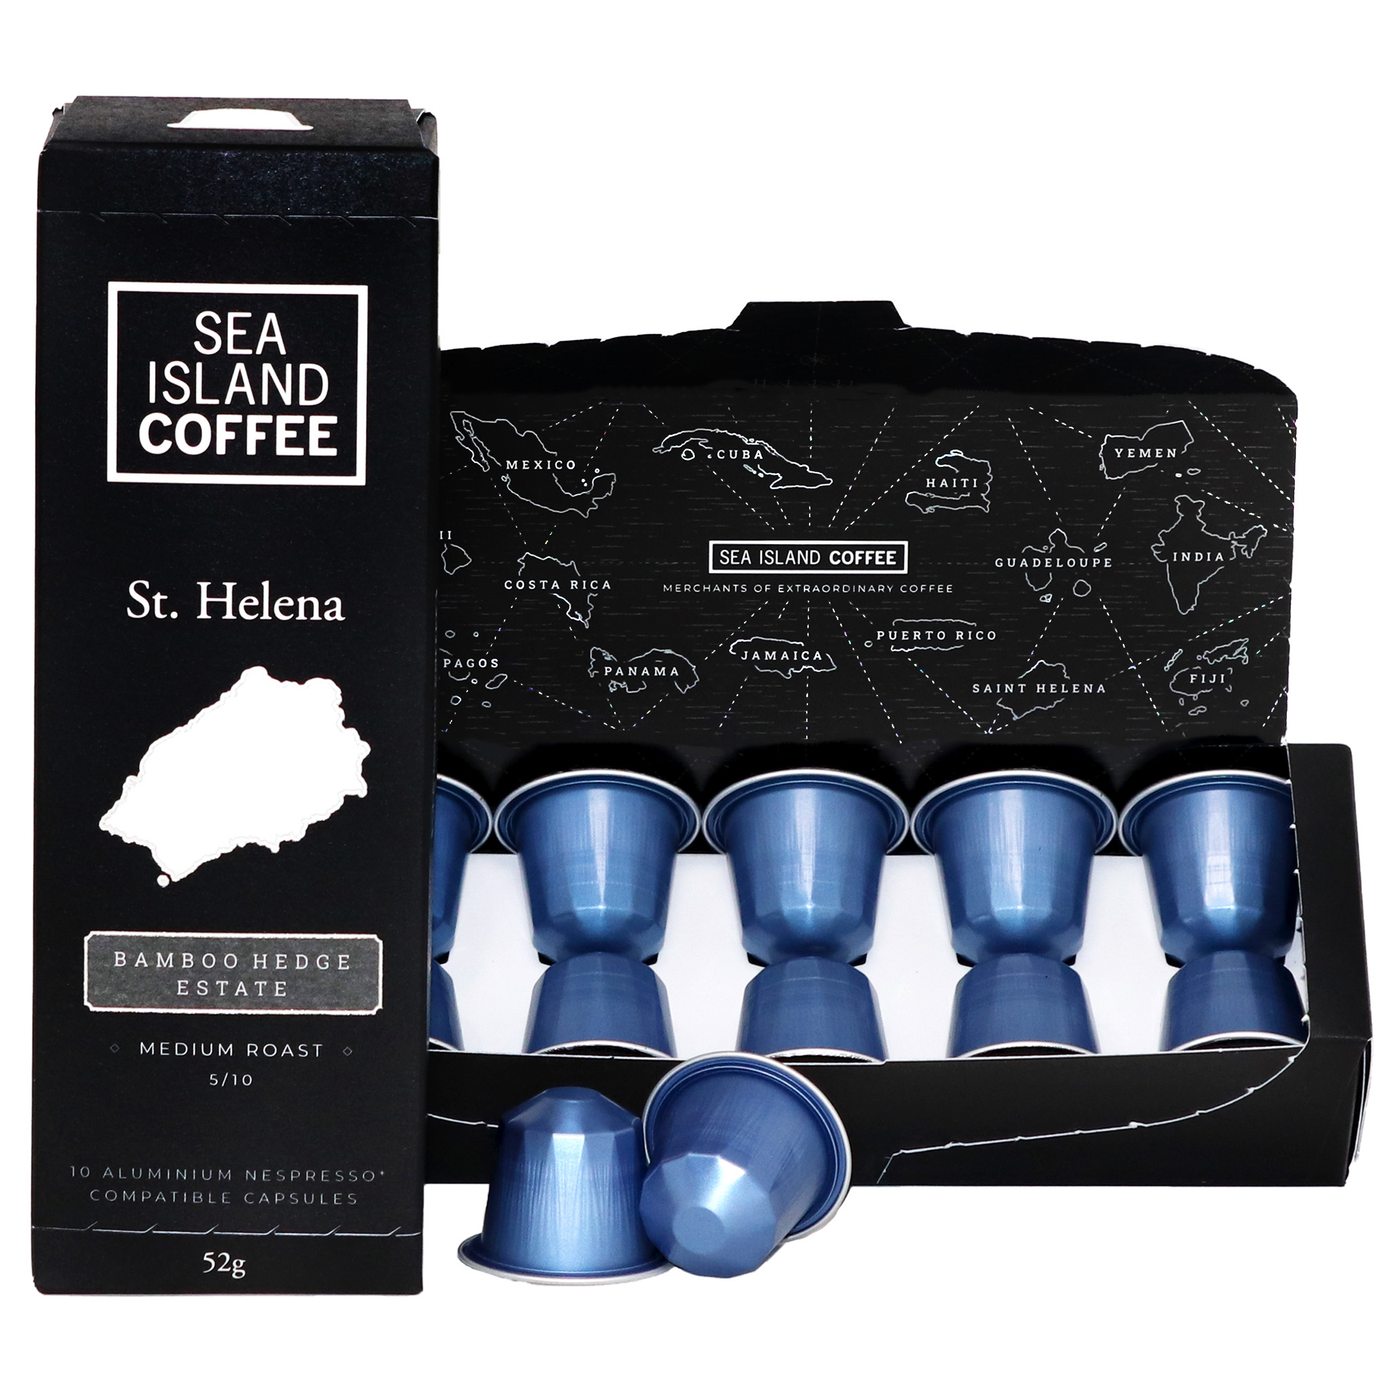 Product photo of St Helena medium roast Nespresso compatible coffee pods